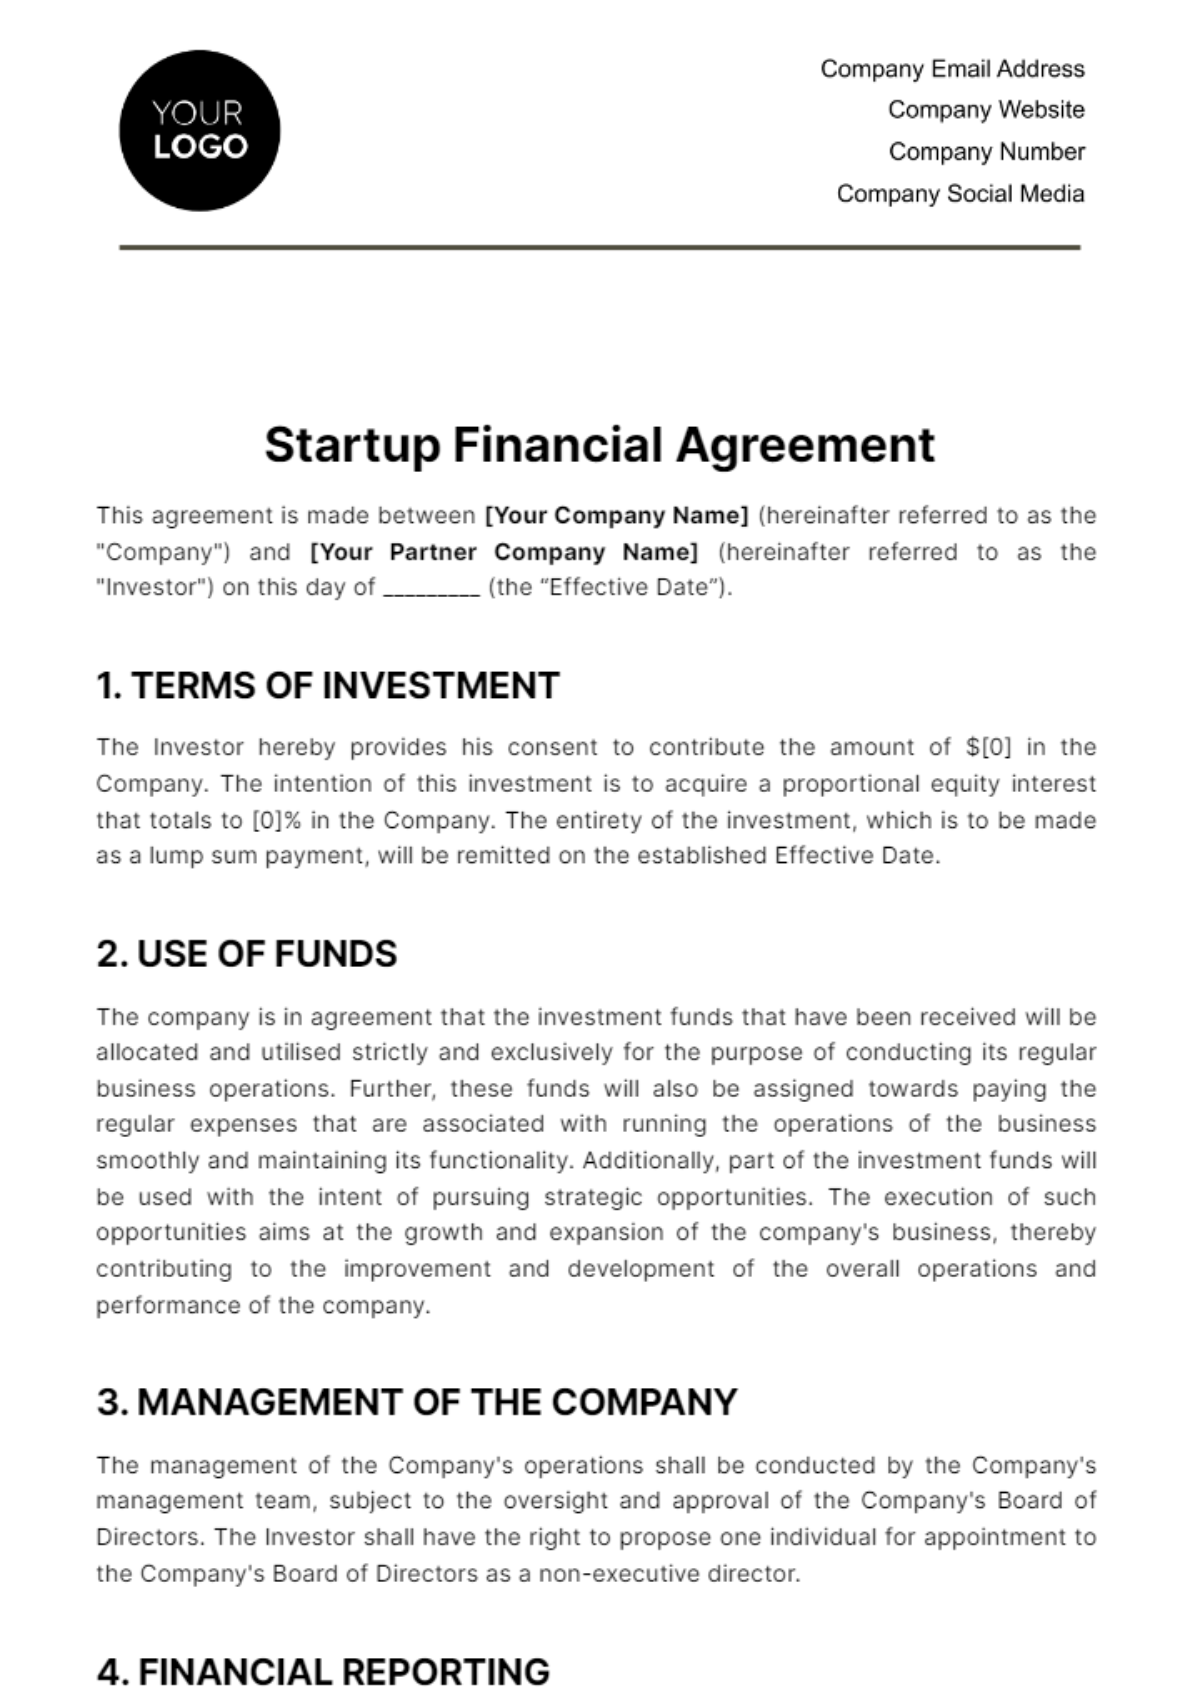 Startup Financial Agreement Template